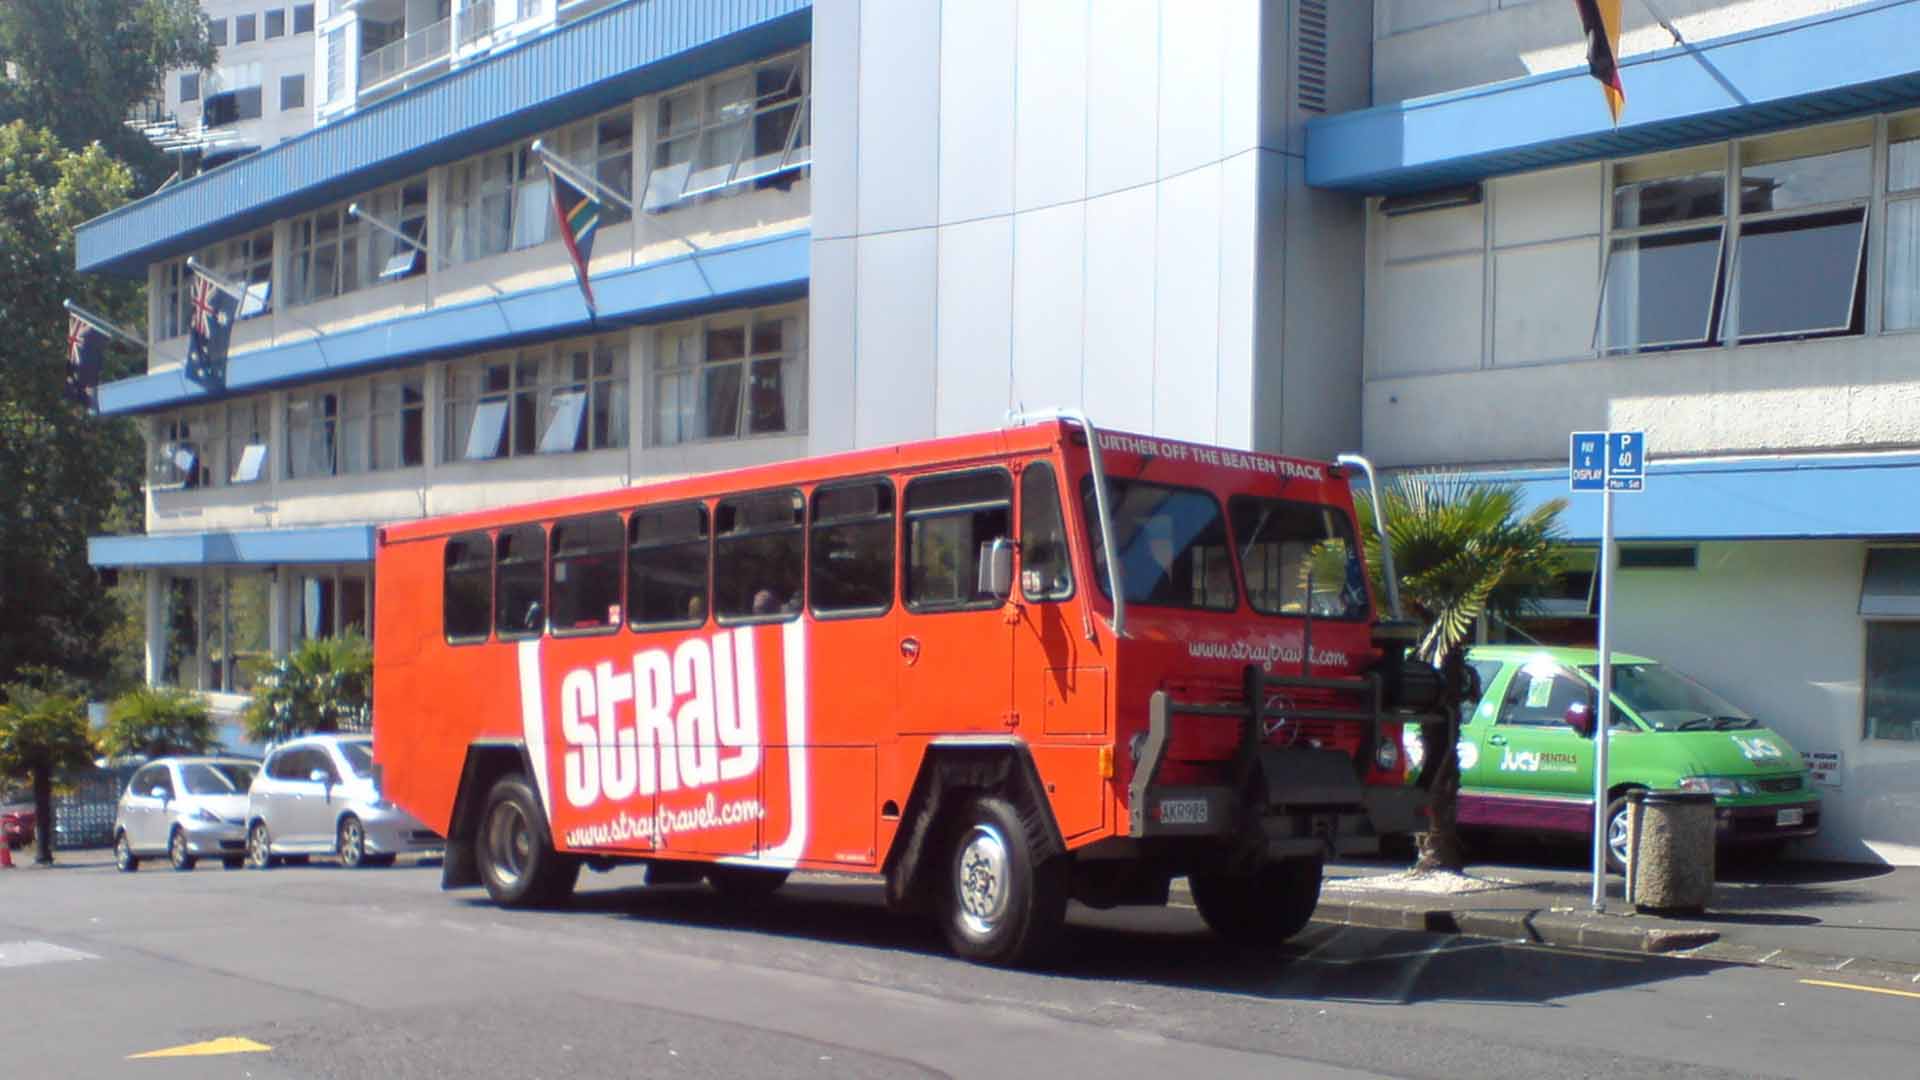 Bus Anbieter in Neuseeland